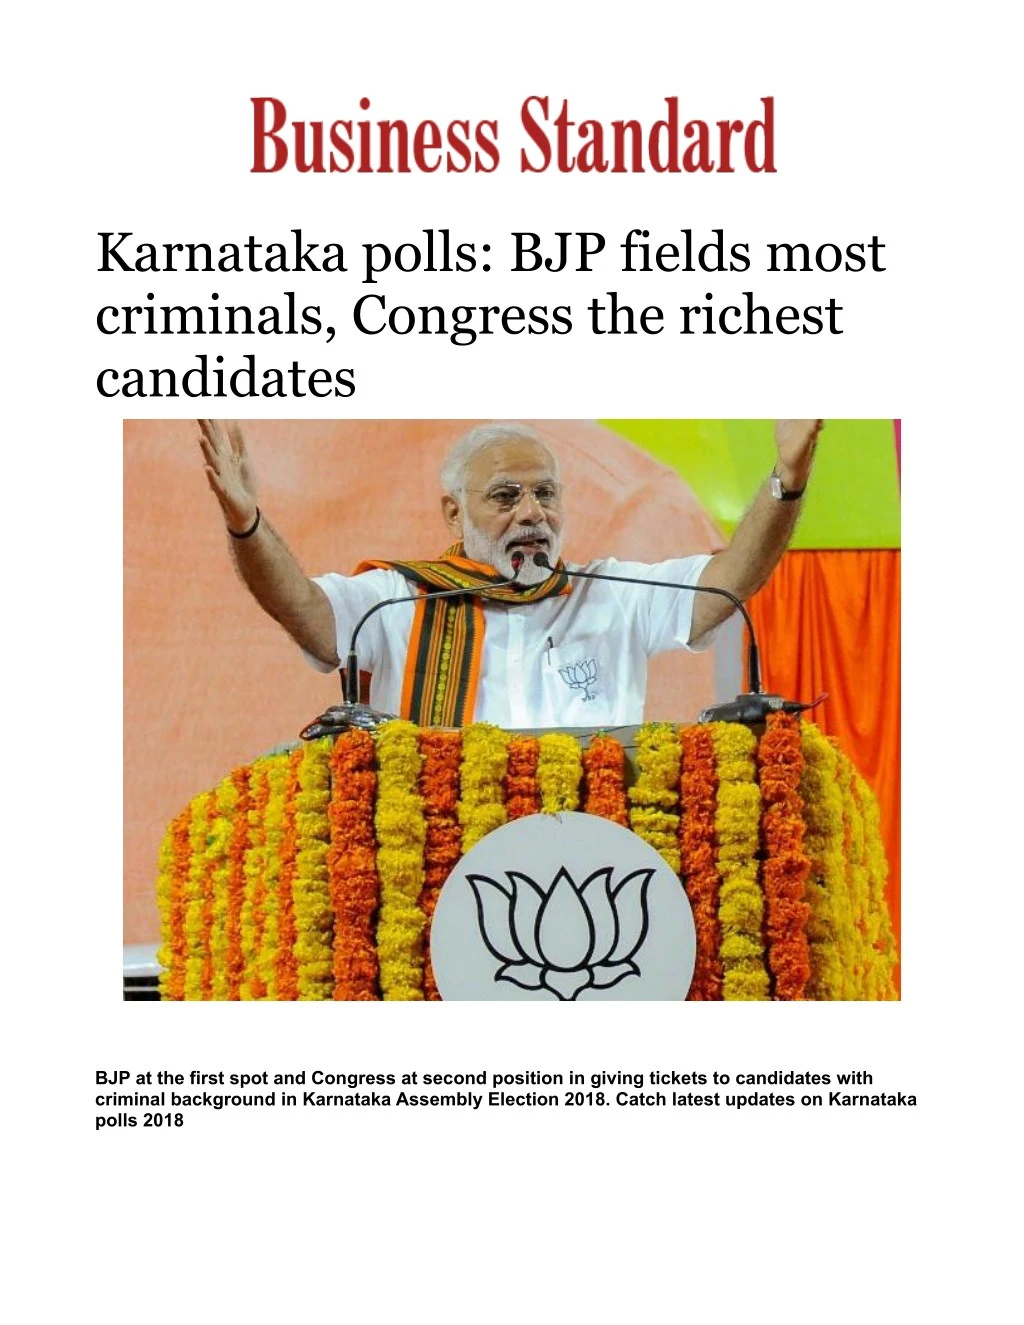 karnataka polls bjp fields most criminals